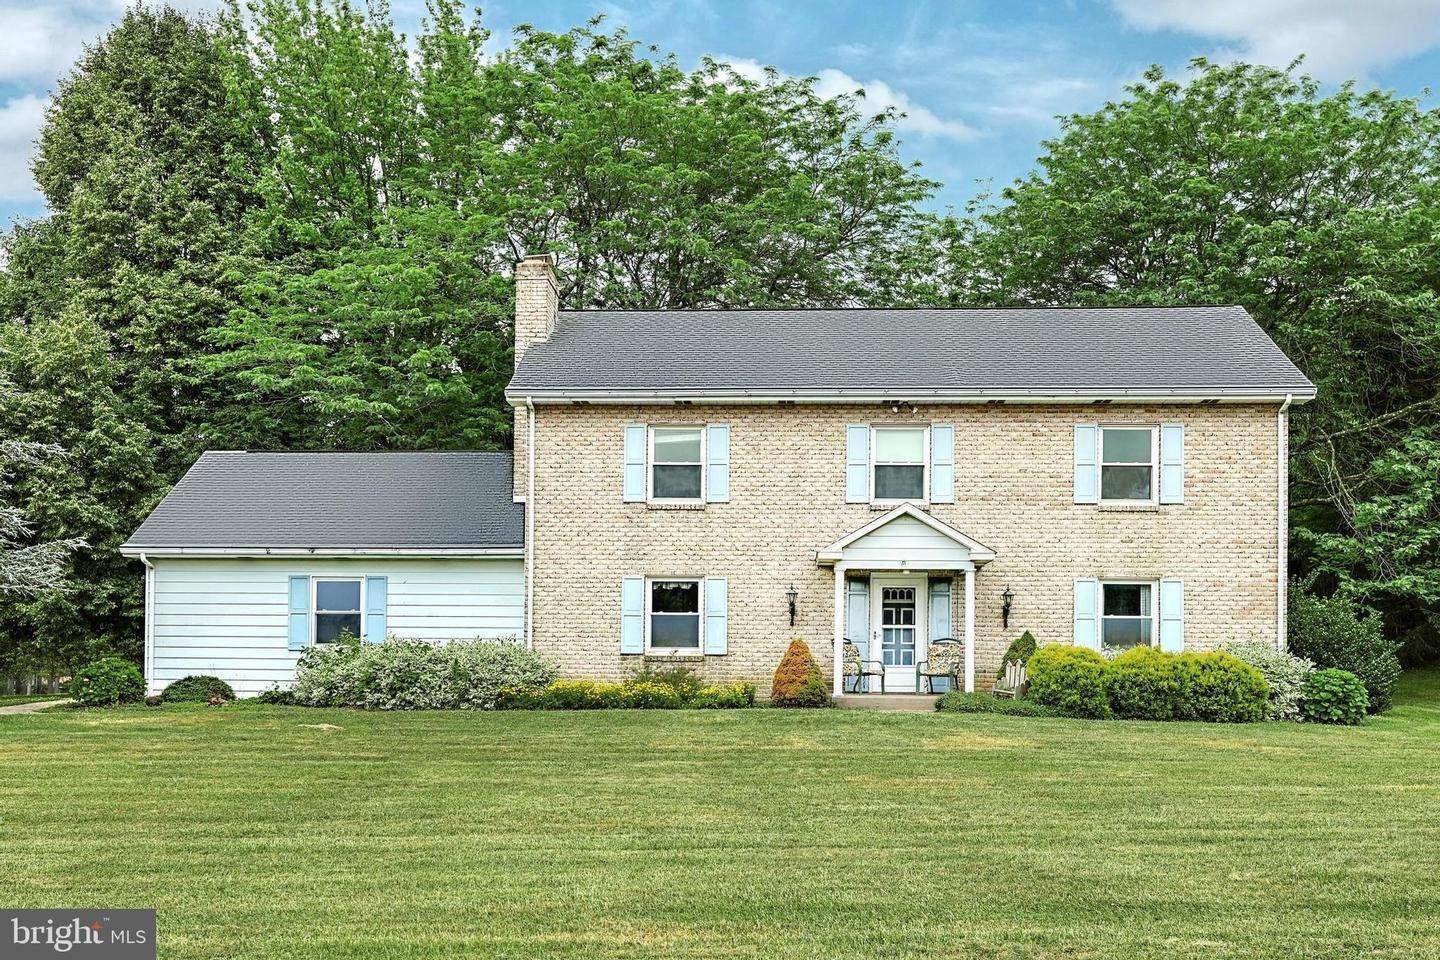 Single Family Homes για την Πώληση στο Glen Rock, Πενσιλβανια 17327 Ηνωμένες Πολιτείες